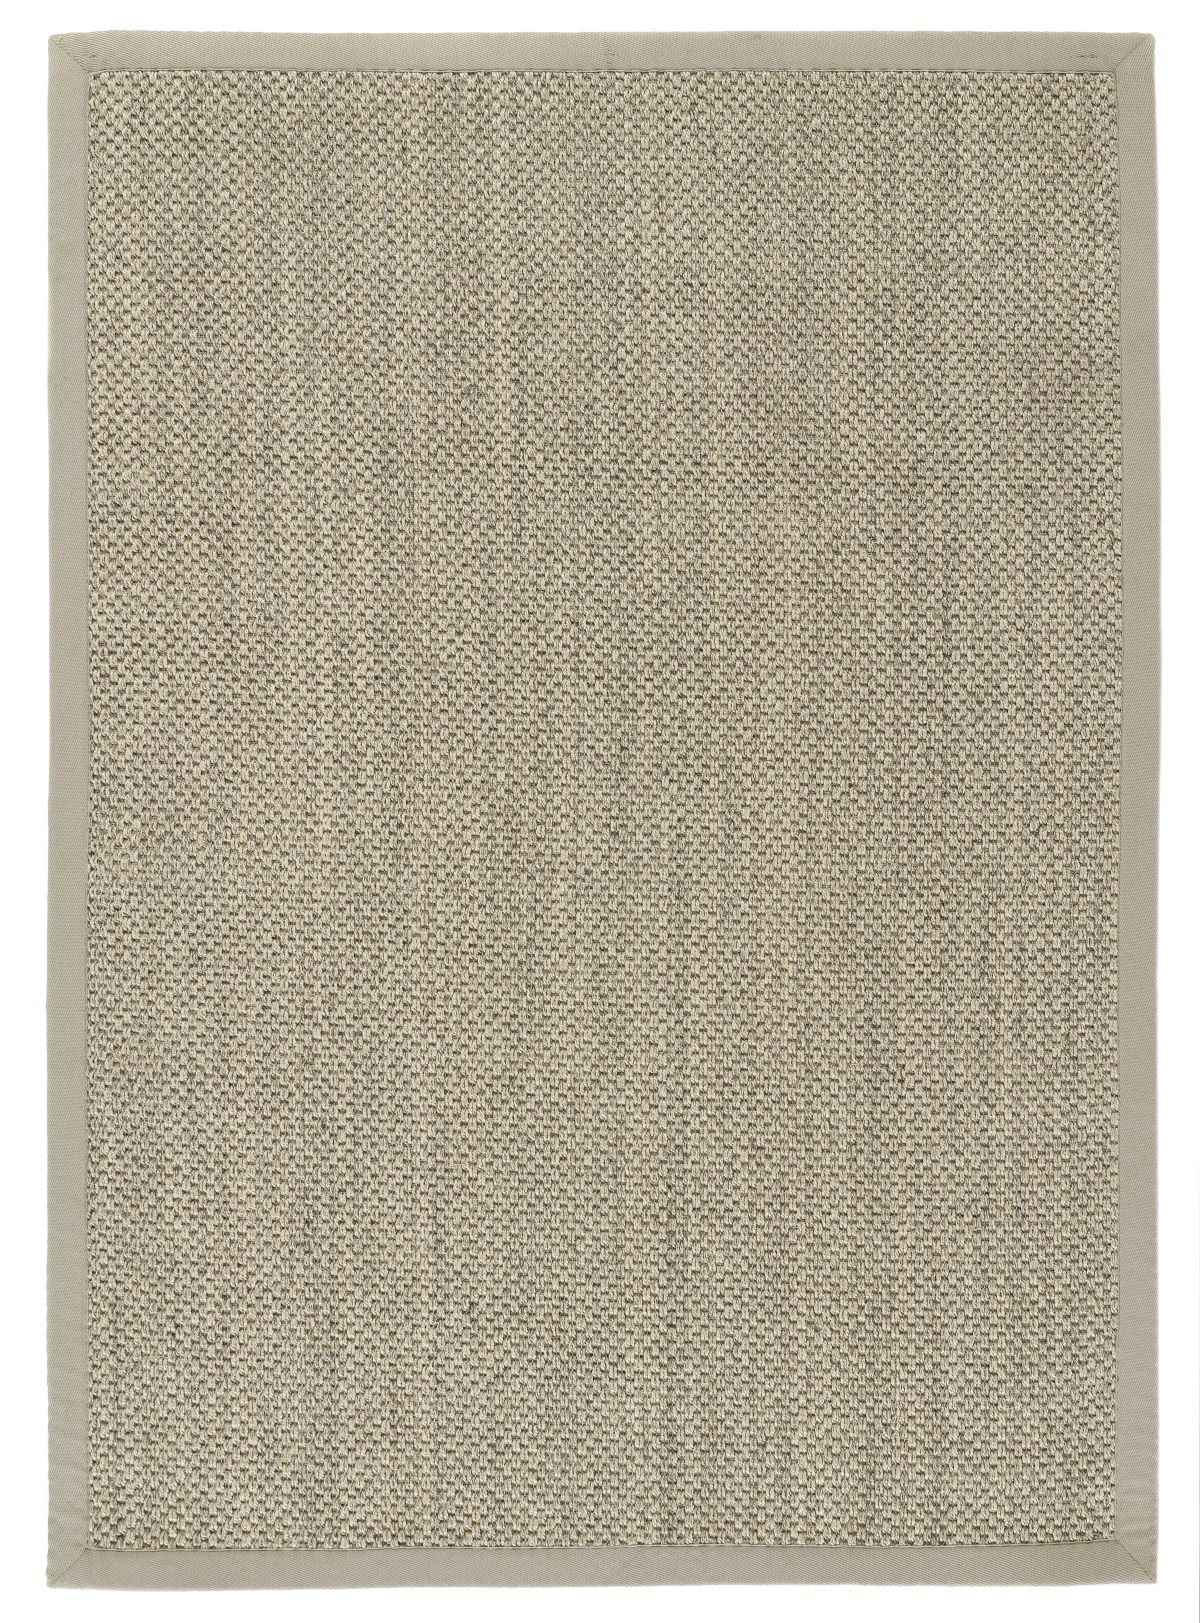 origin-rug-sisal-light-beige-with-sand-border